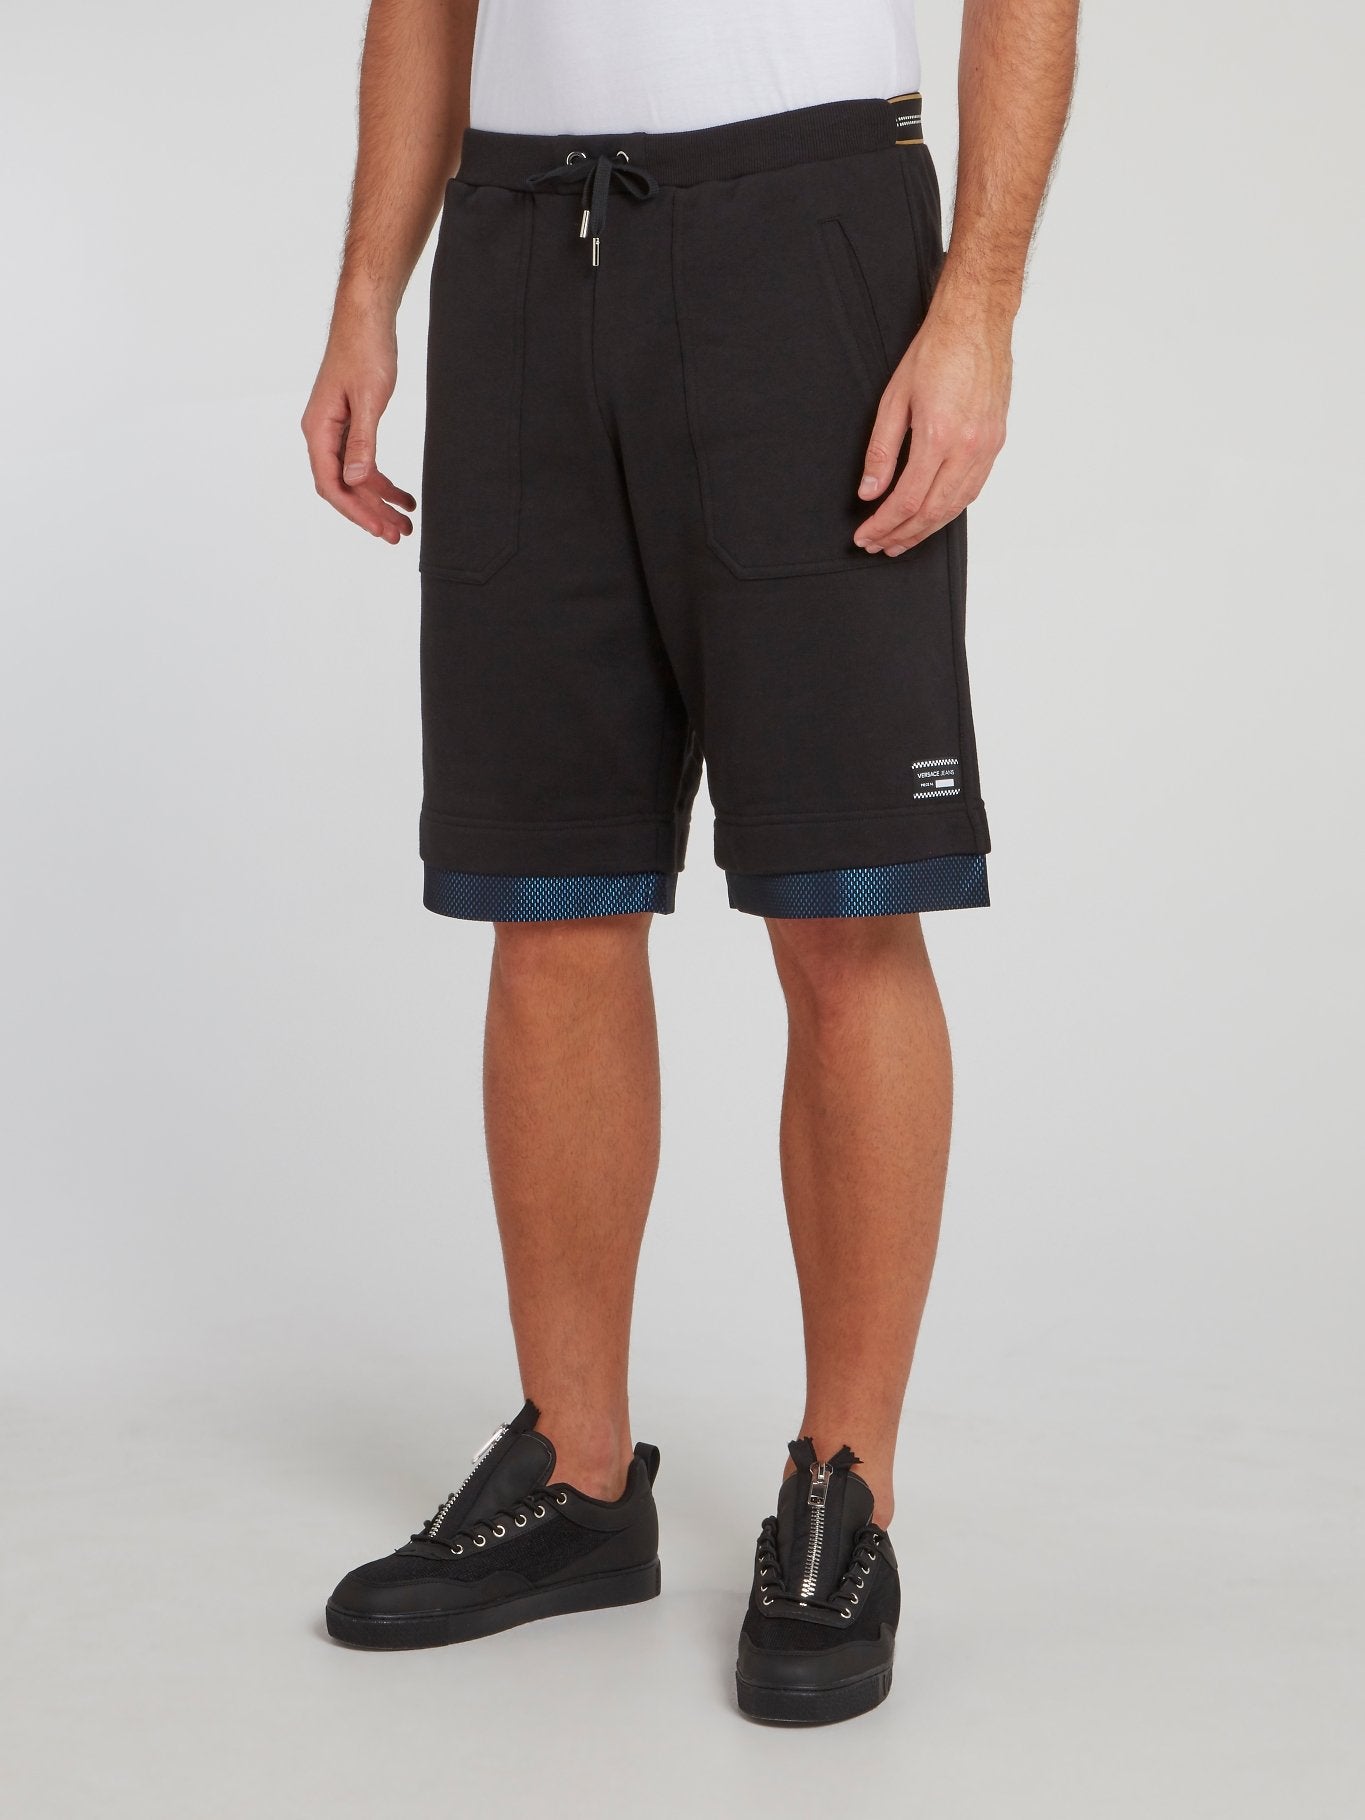 Black Cotton Gym Shorts